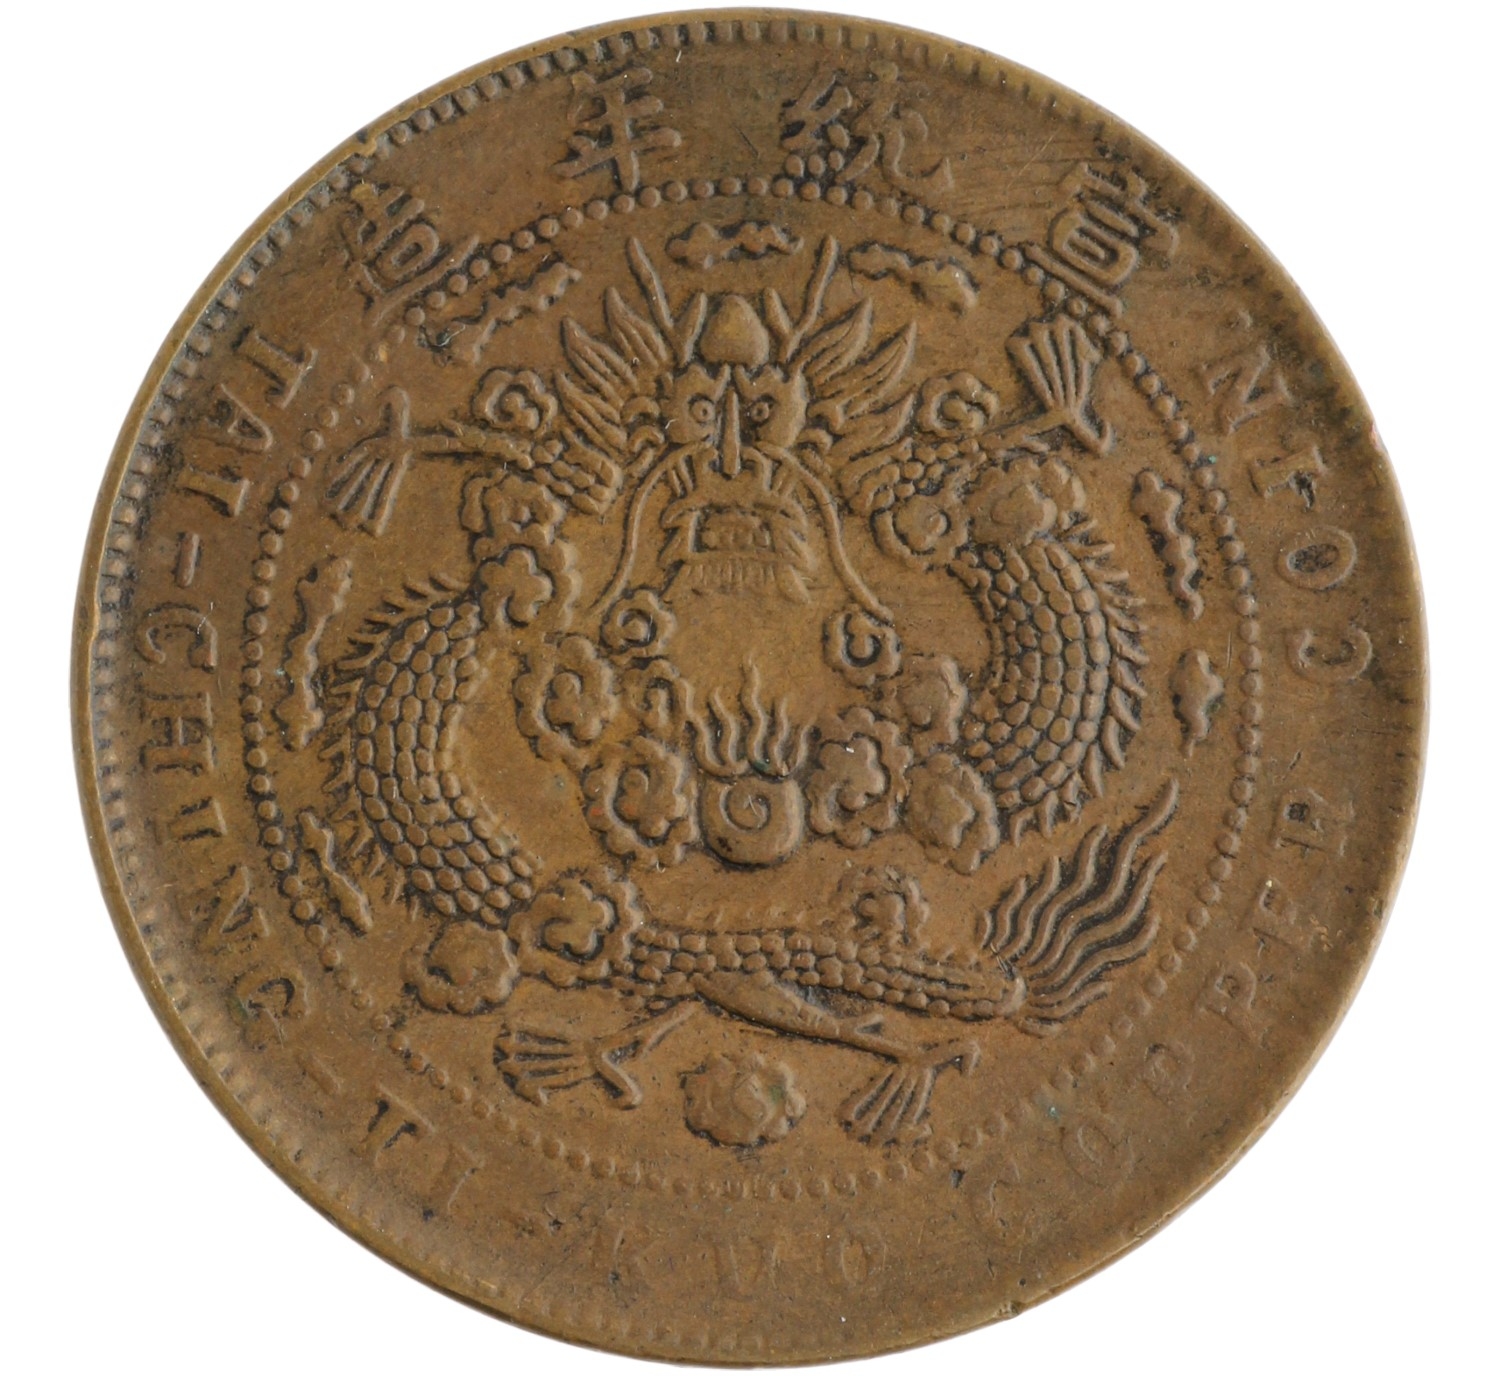 20 Cash - China (Manchuria) - c. 1922